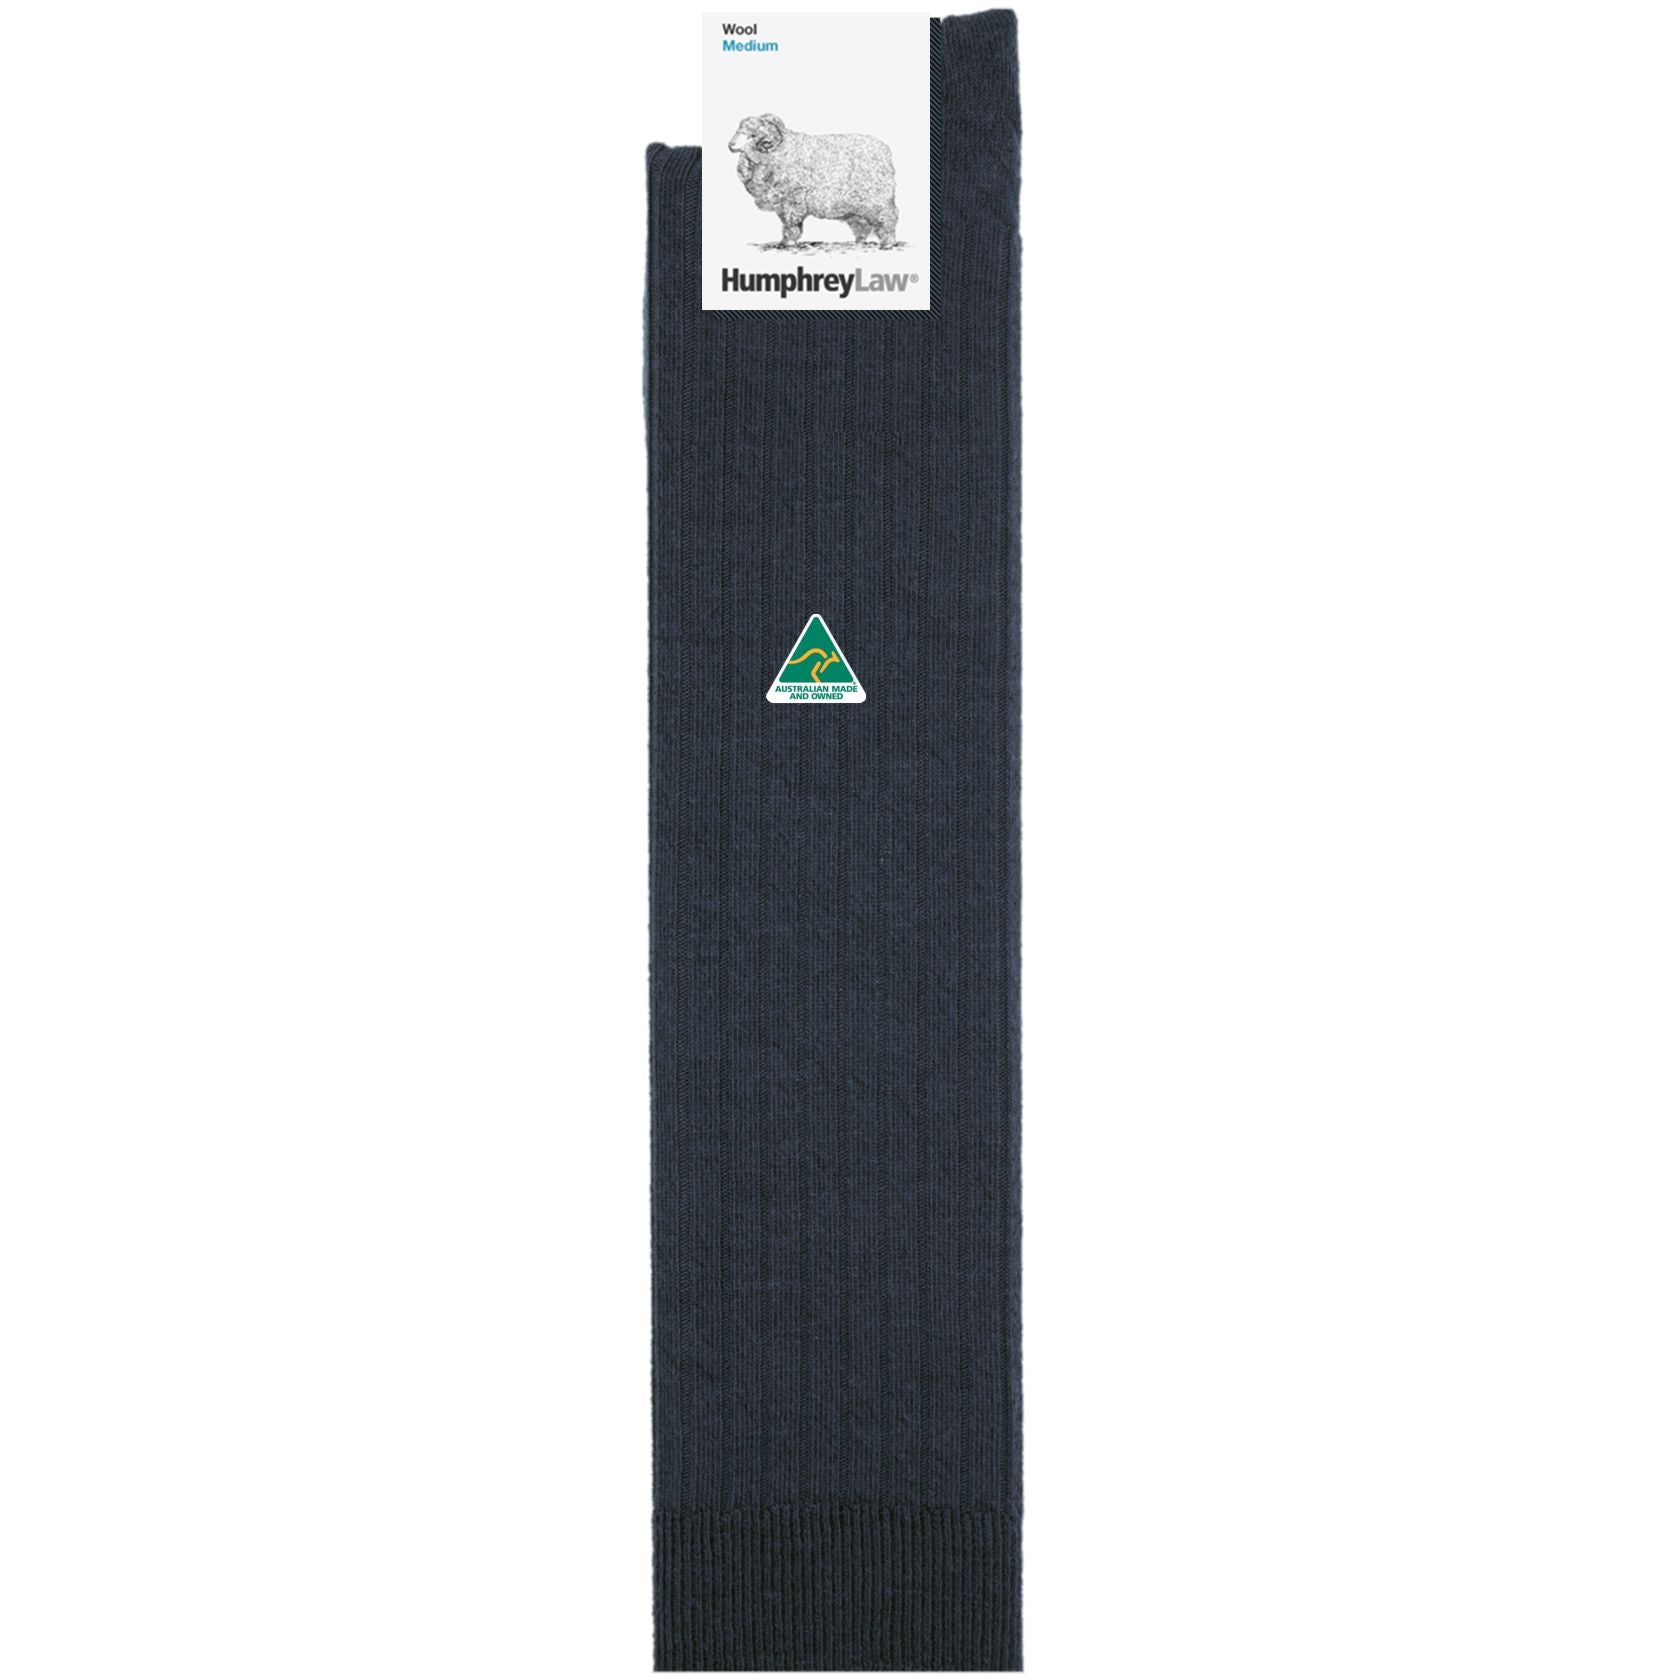 Wool Men's Knee High Socks in Dark Grey - Aussie Made